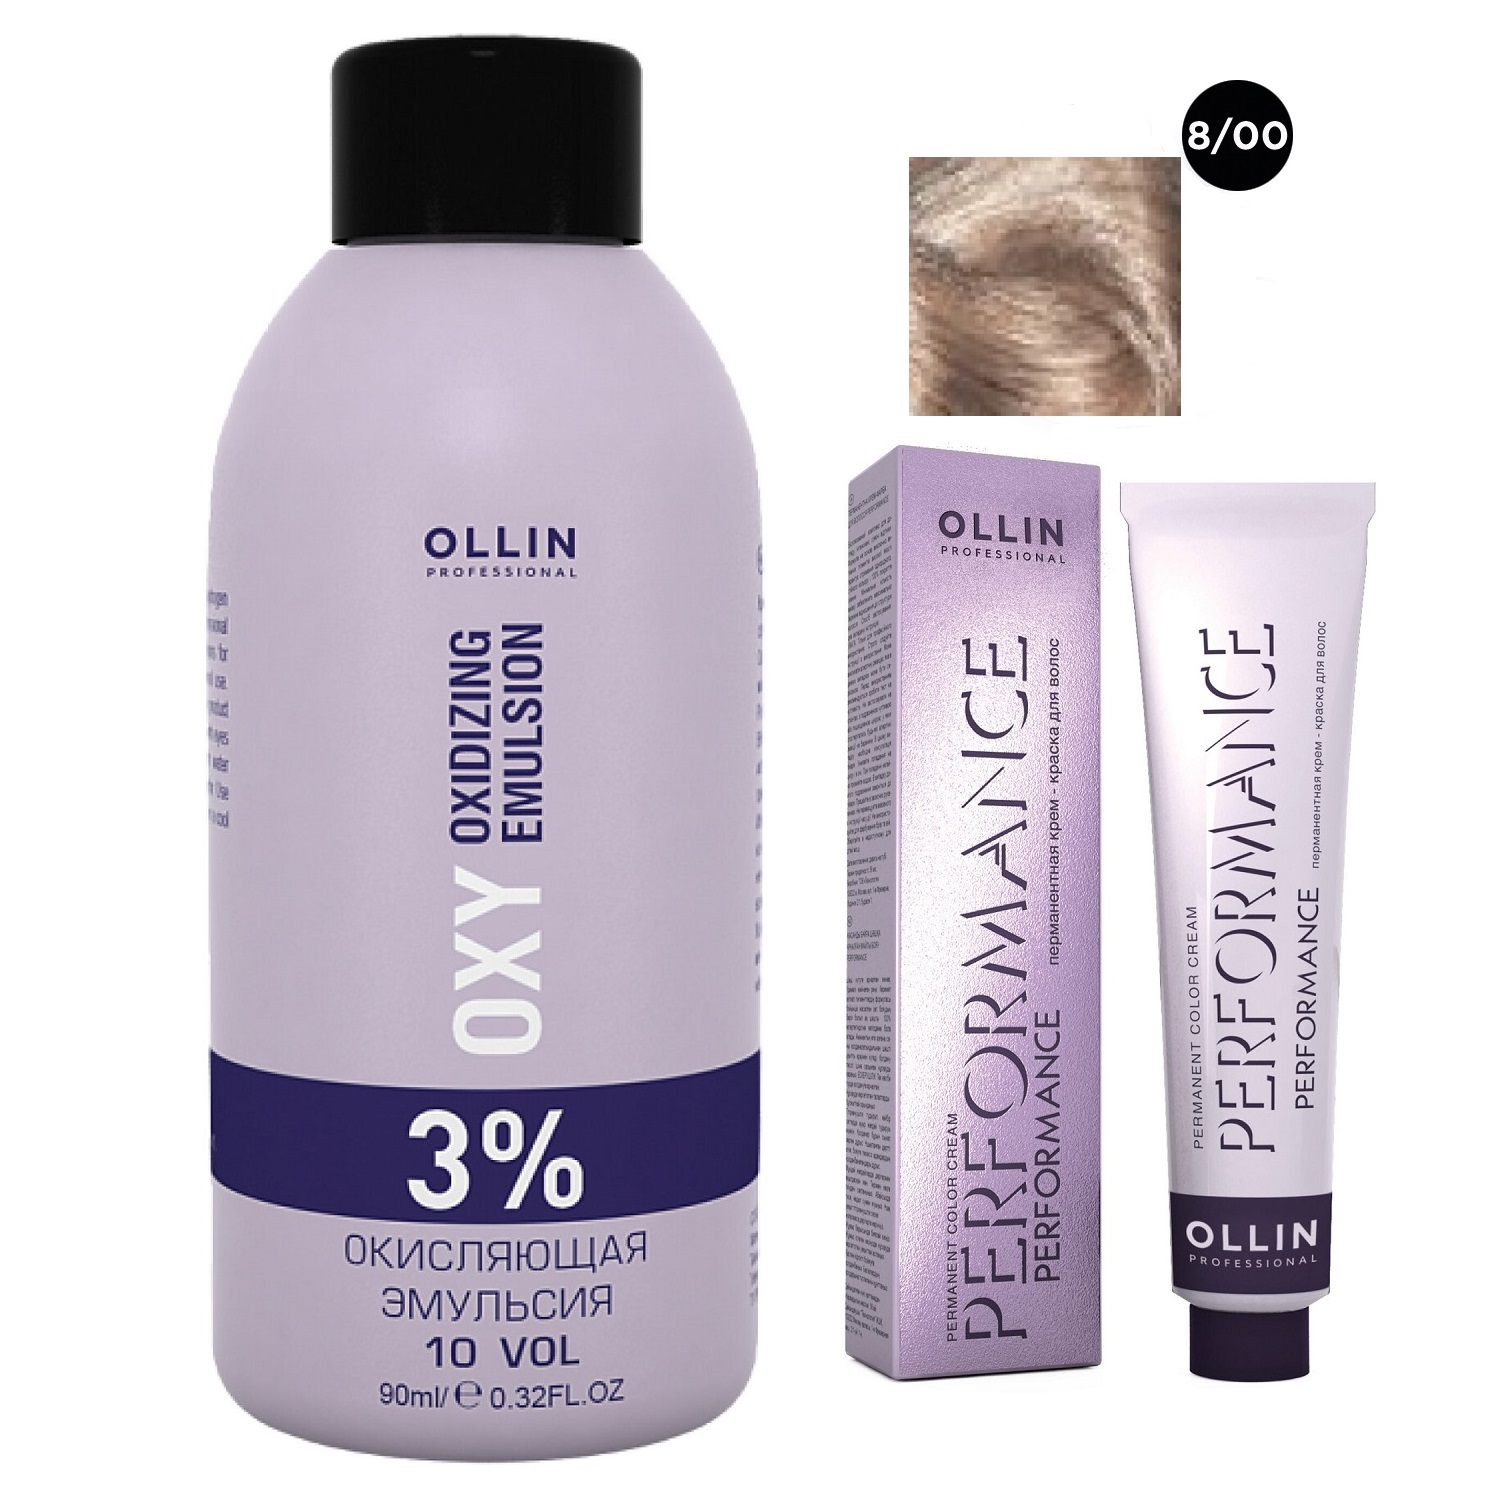 Ollin Professional Набор Перманентная крем-краска для волос Ollin Performance оттенок 8/00 светло-русый глубокий 60 мл + Окисляющая эмульсия Oxy 3% 90 мл (Ollin Professional, Performance) цена и фото